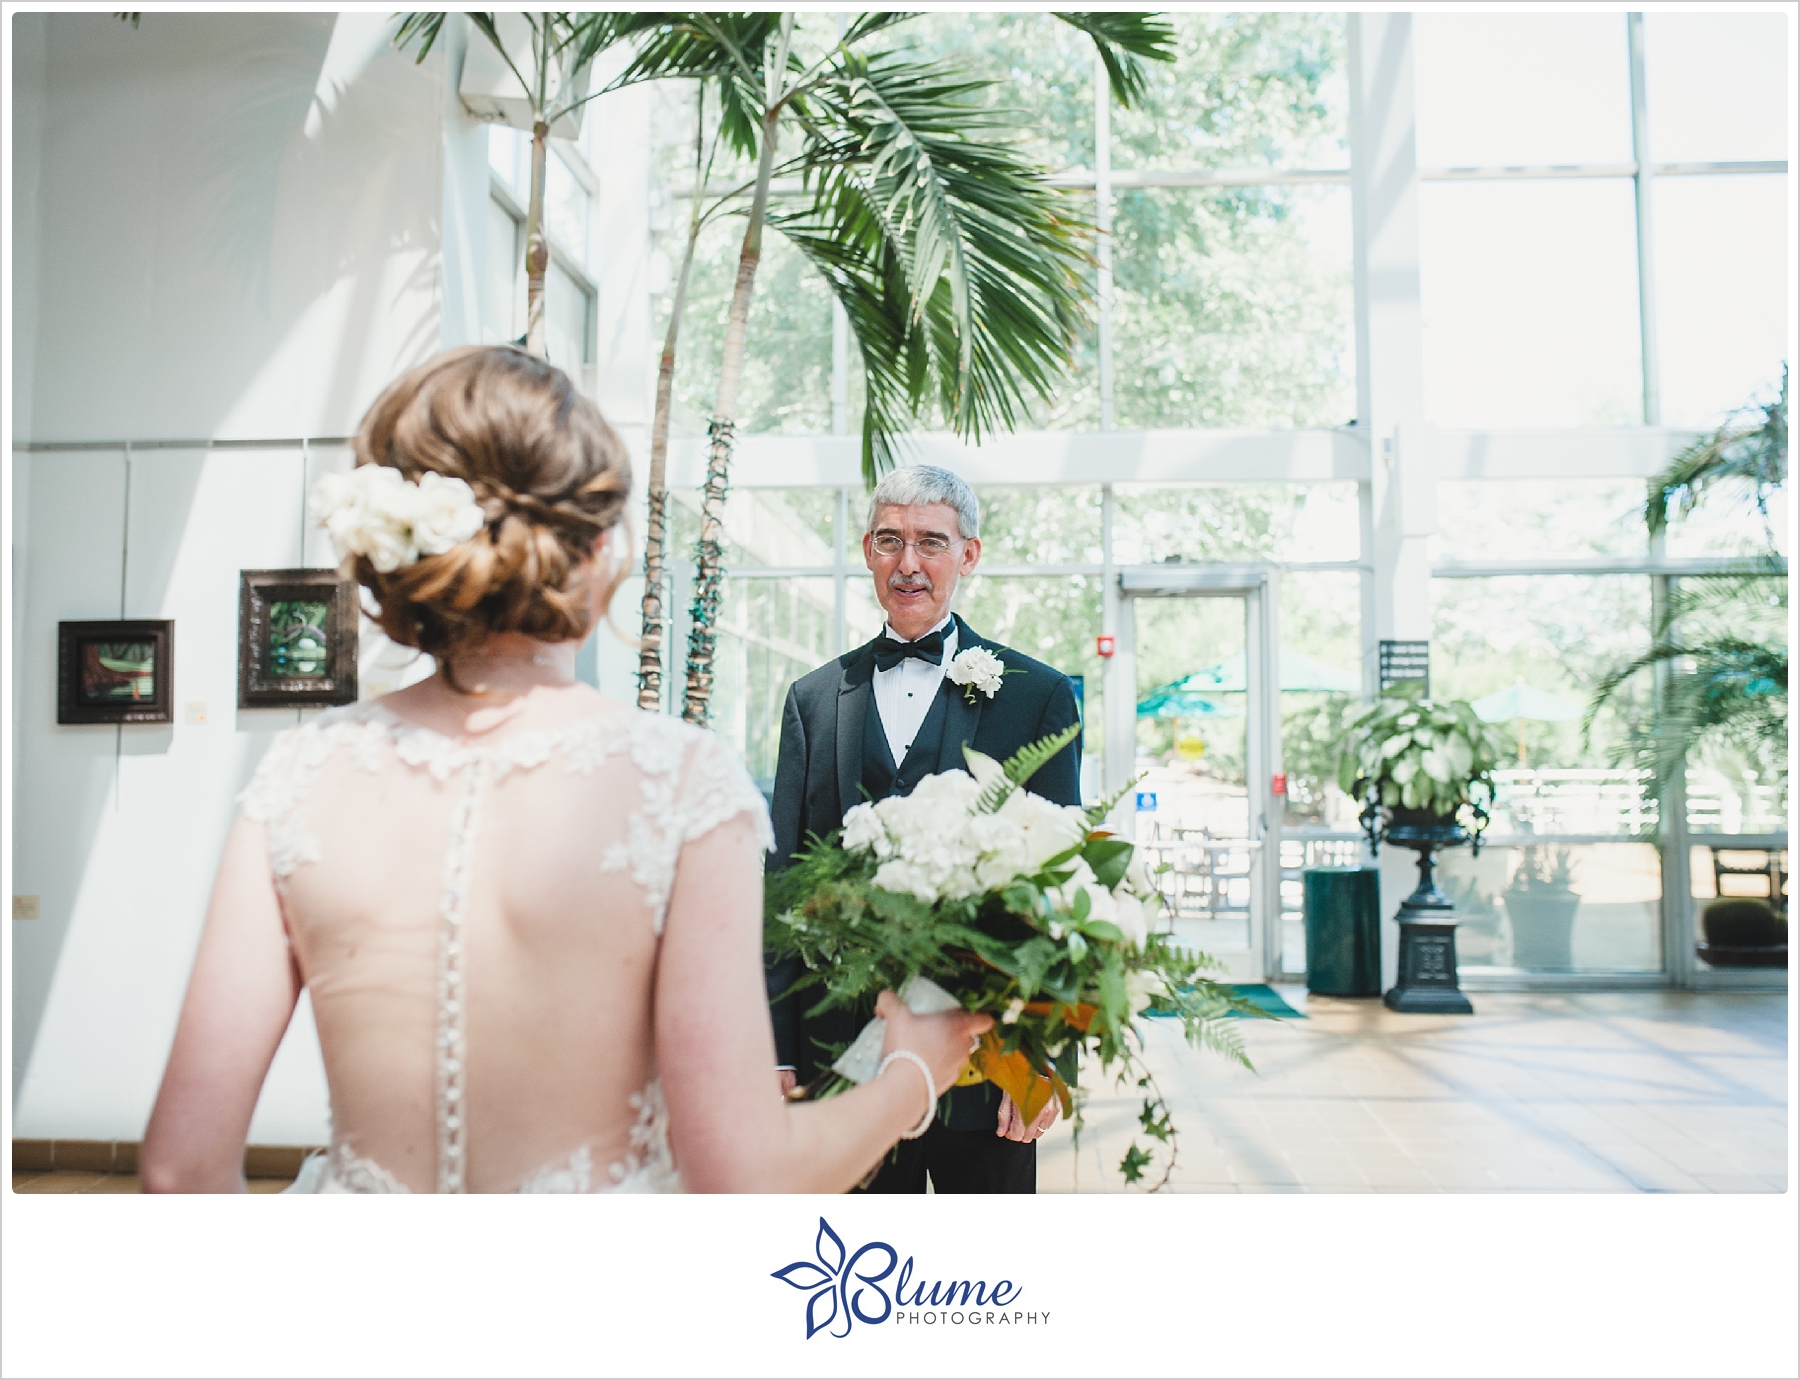 Elijana Cosmetics,athens botanical gardens,athens wedding photographer,athens wedding photography,state botanical garden of georgia,terrace room,